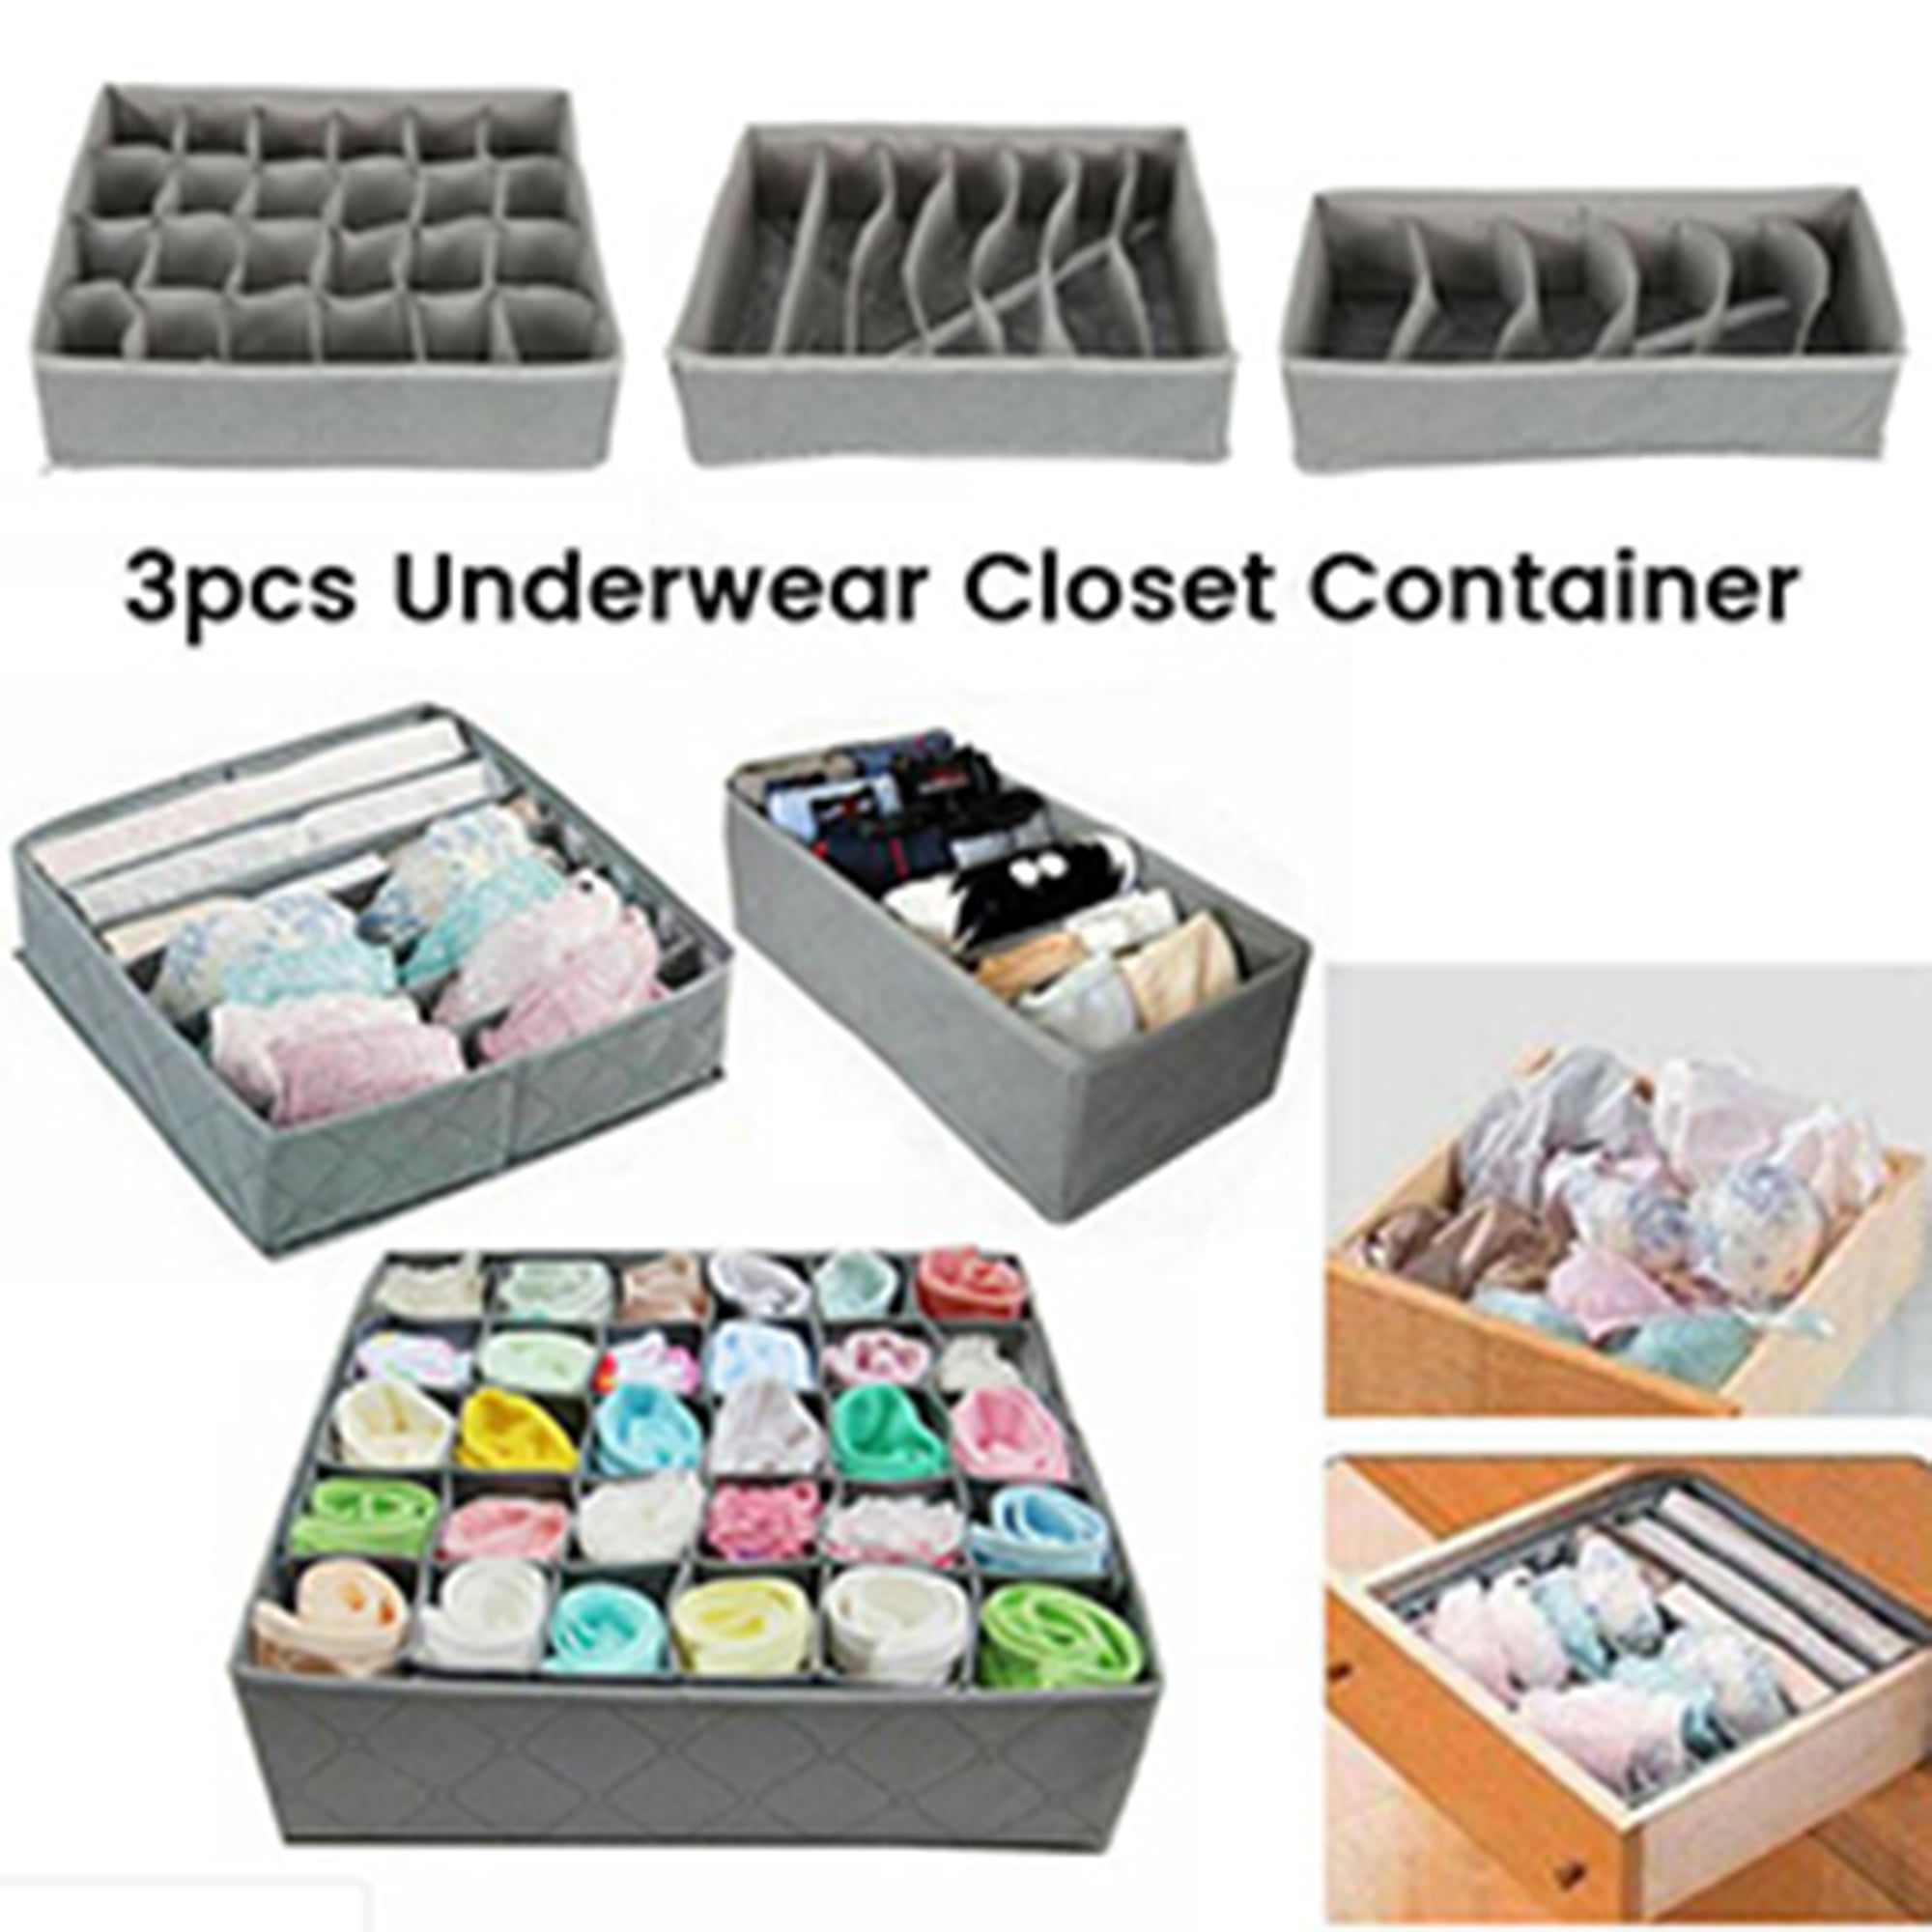 Grey 3PCS Drawer Organisers Dividers Wardrobe Organiser with ZIPS,Collapsible Closet Cabinet Organizer Underwear Storage Boxes,for Socks Underwear Bras Ties Scarves 